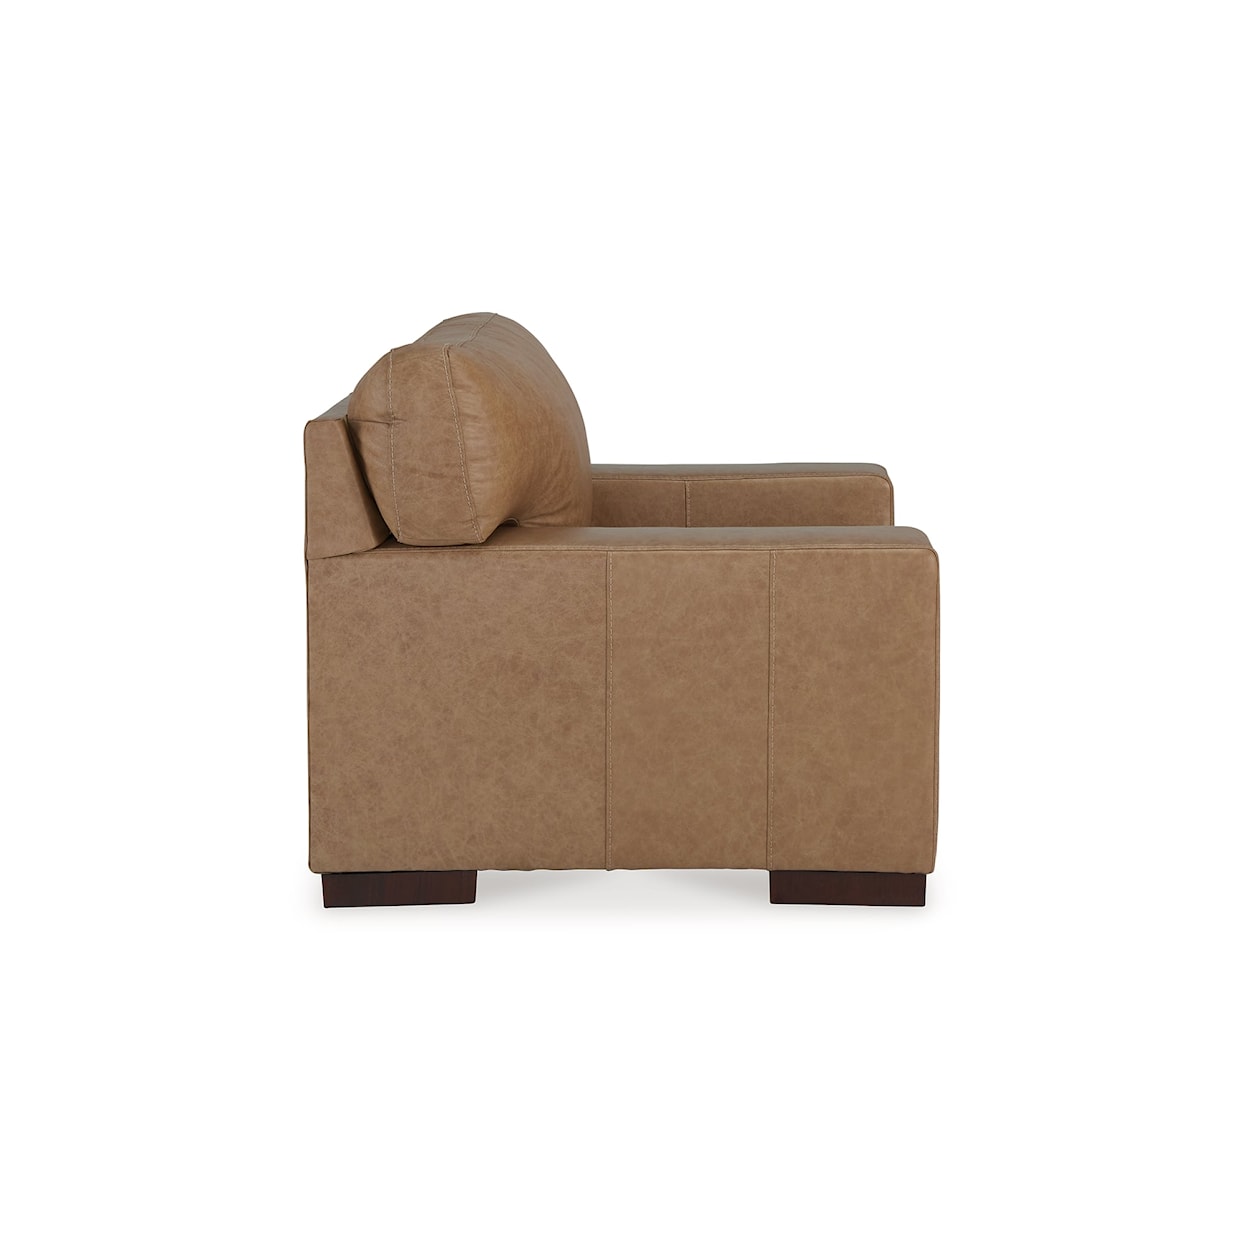 Ashley Furniture Signature Design Lombardia Chair and a Half